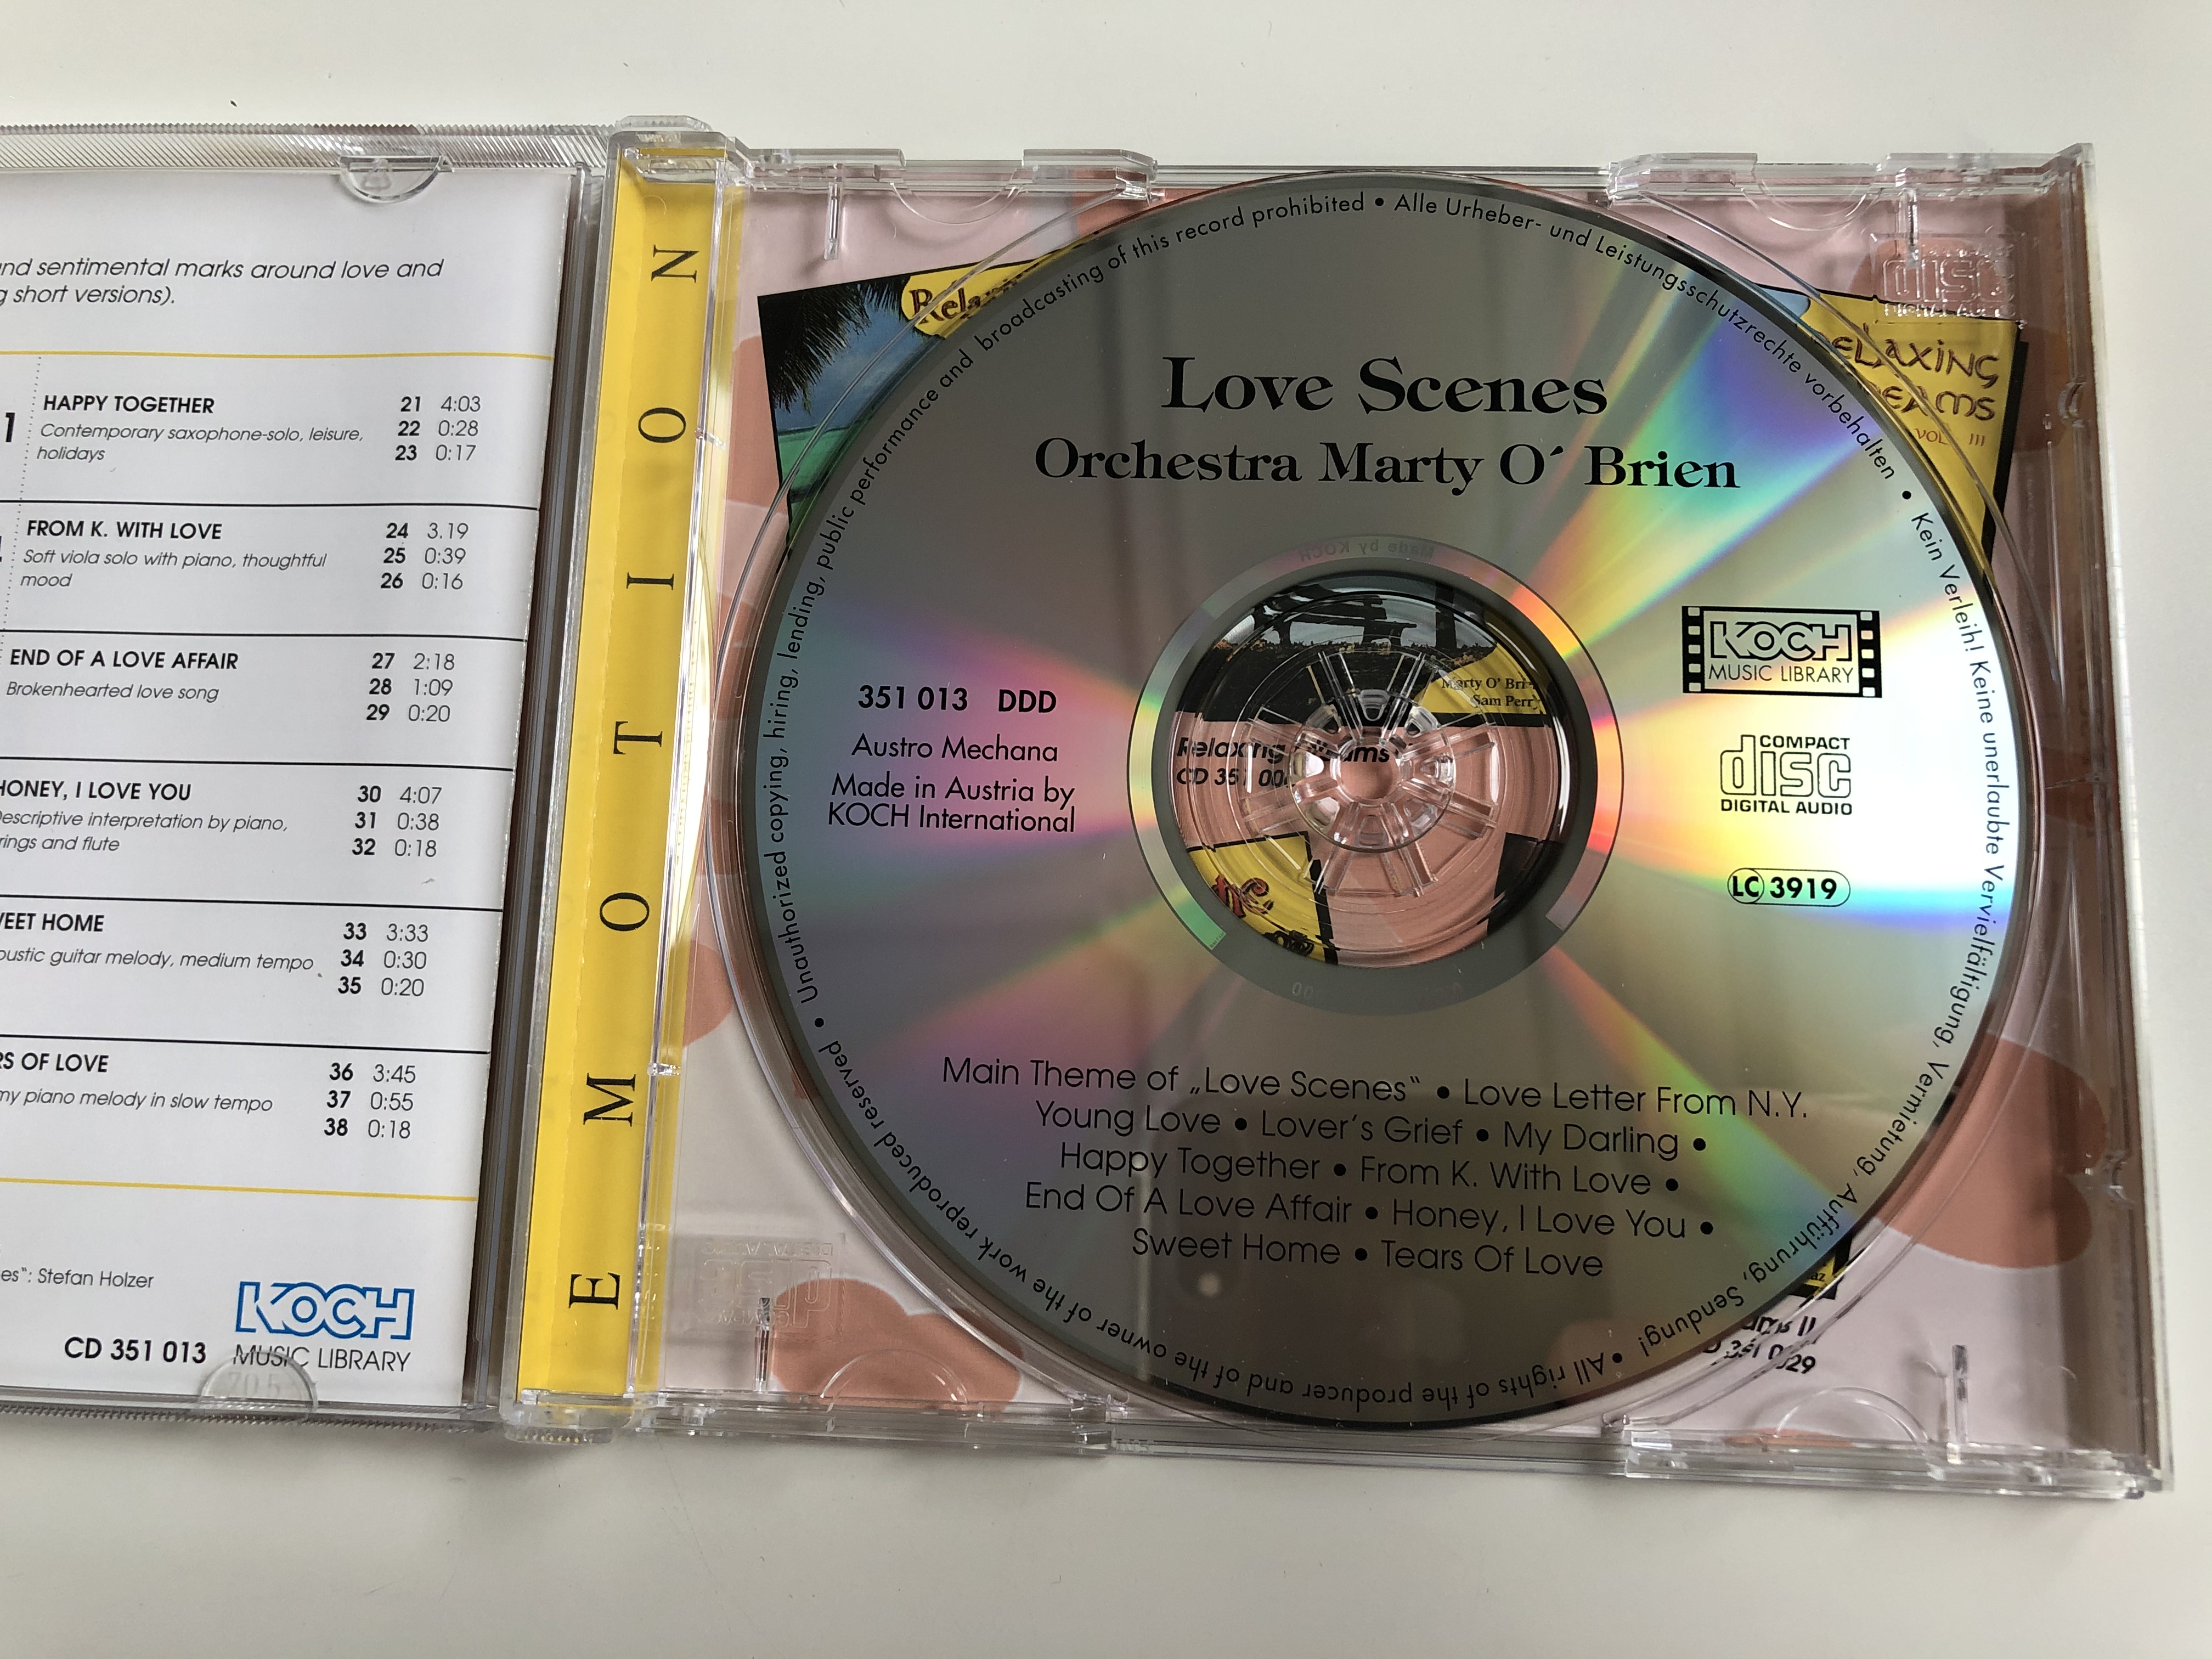 love-scenes-orchestra-marty-o-brien-koch-audio-cd-1995-351-013-4-.jpg